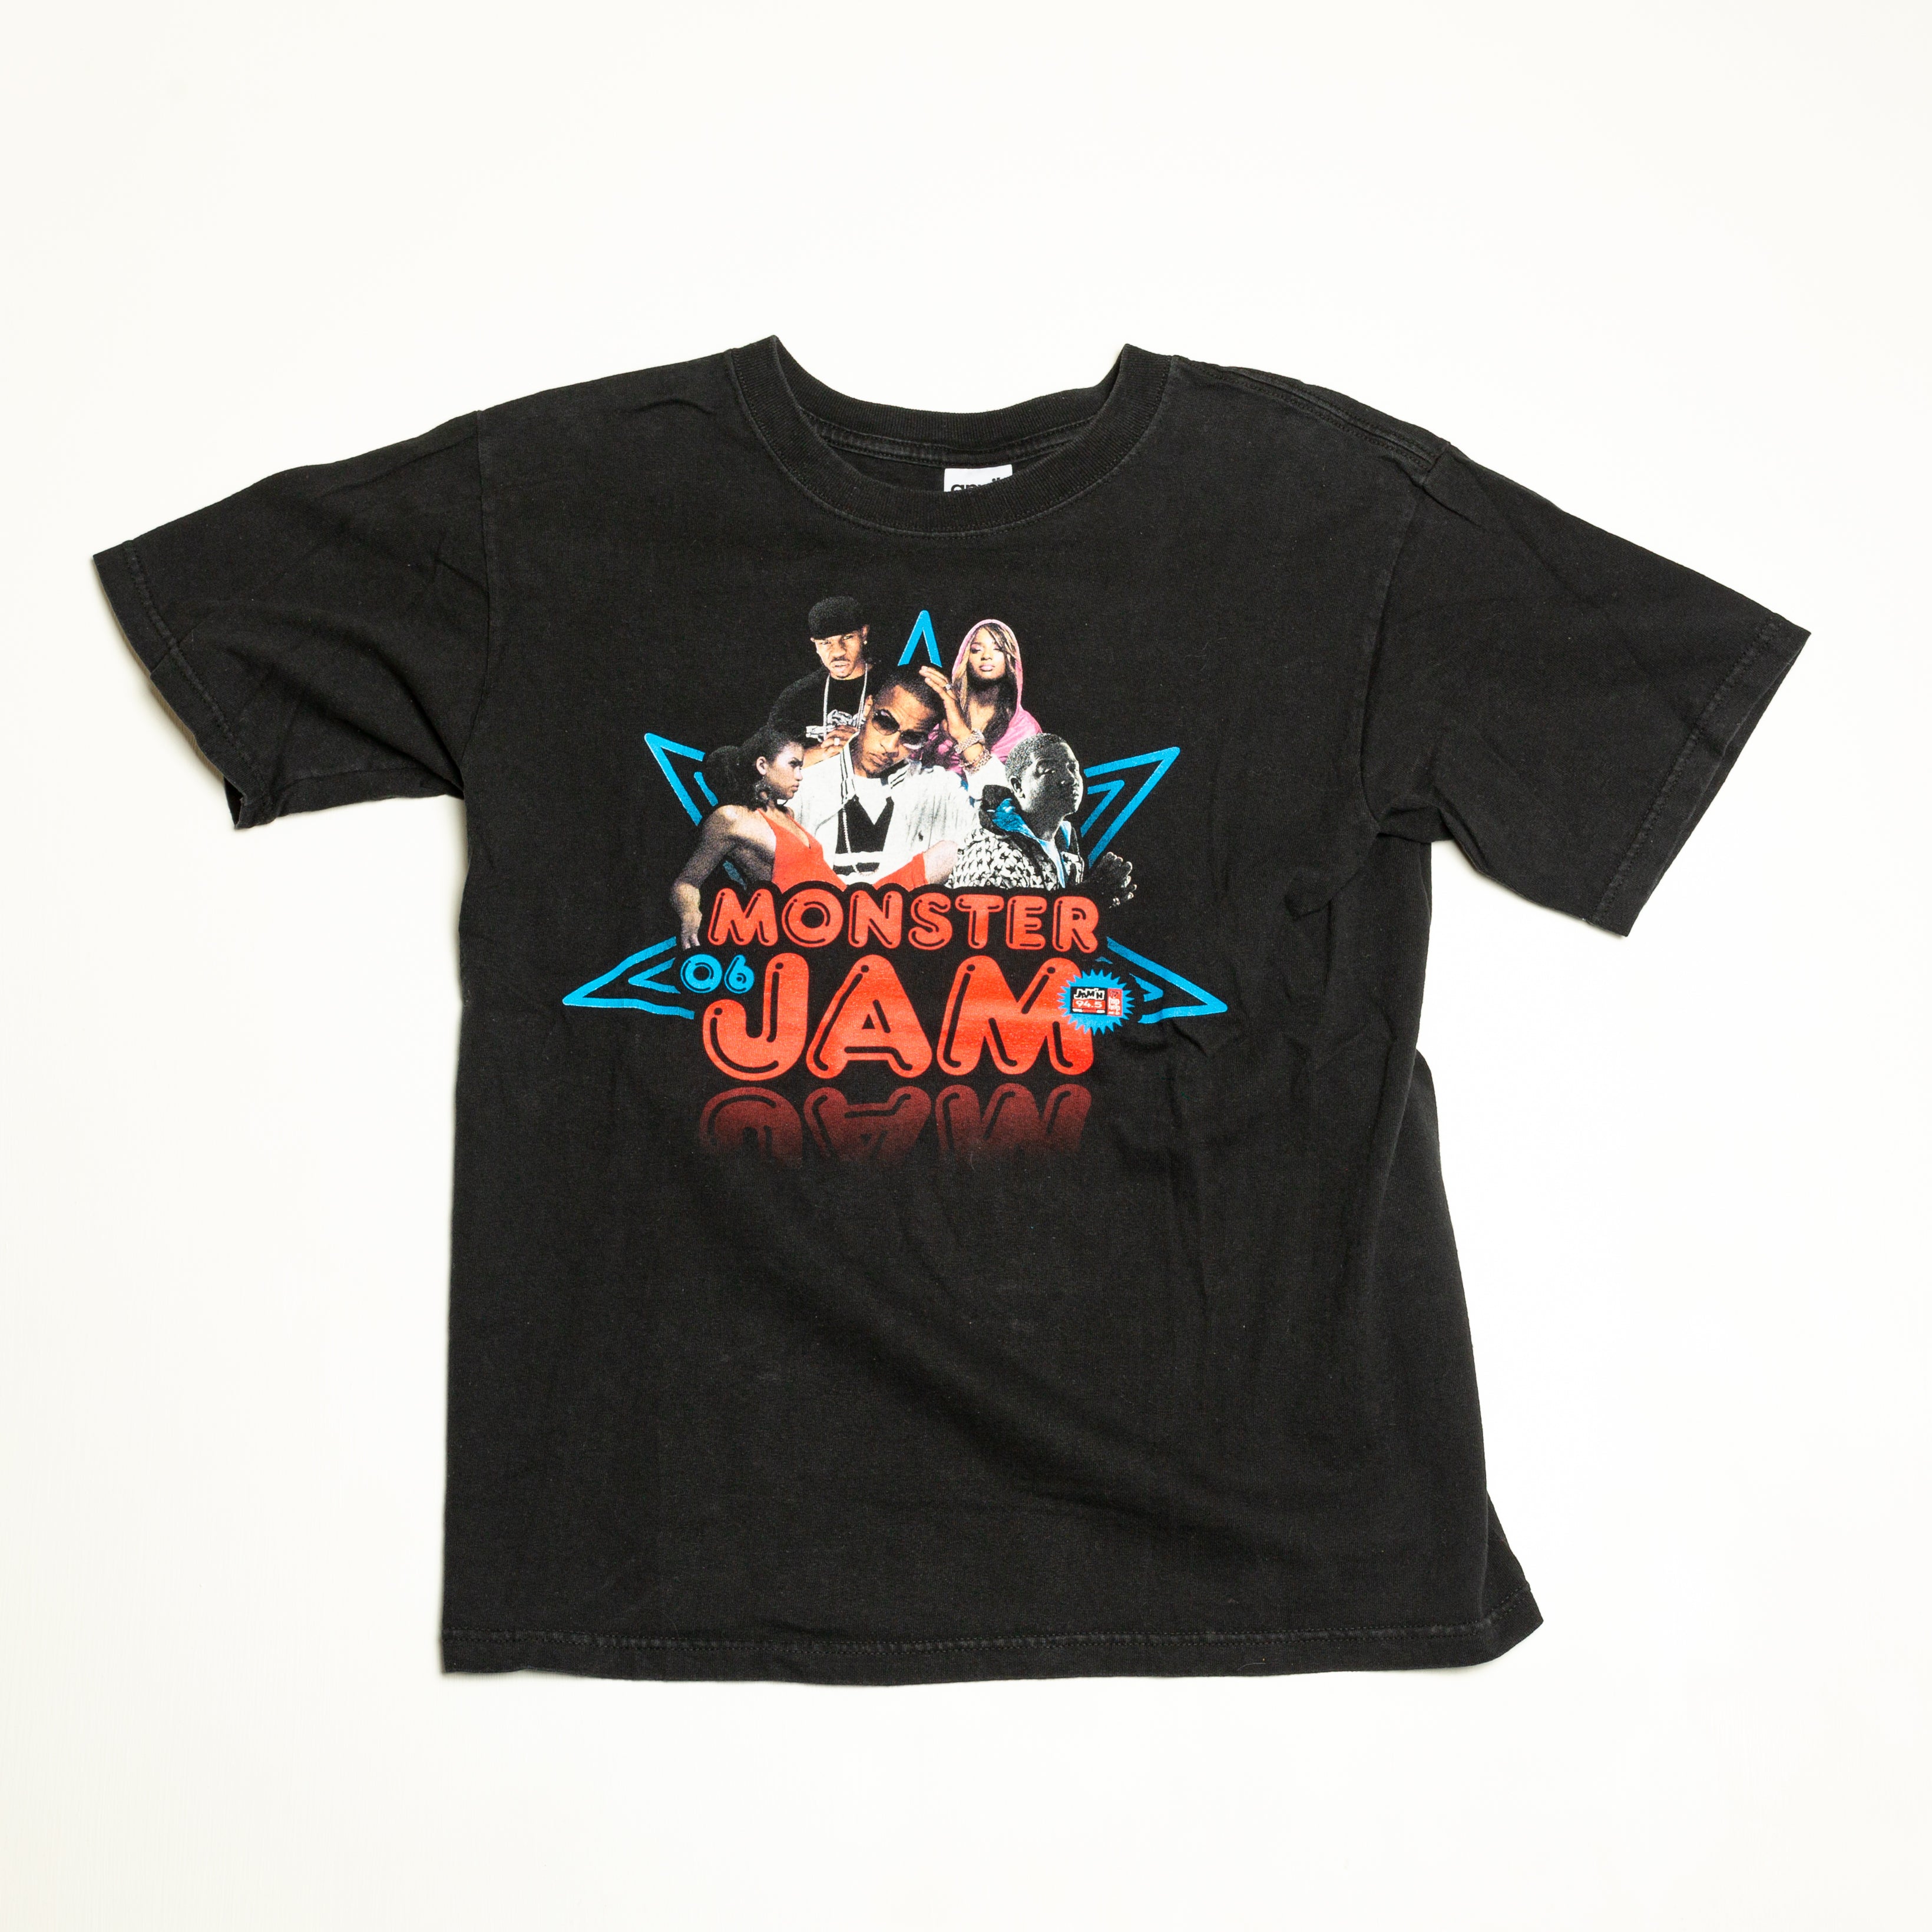 2006 Monster Jam Tour T-Shirt Size S